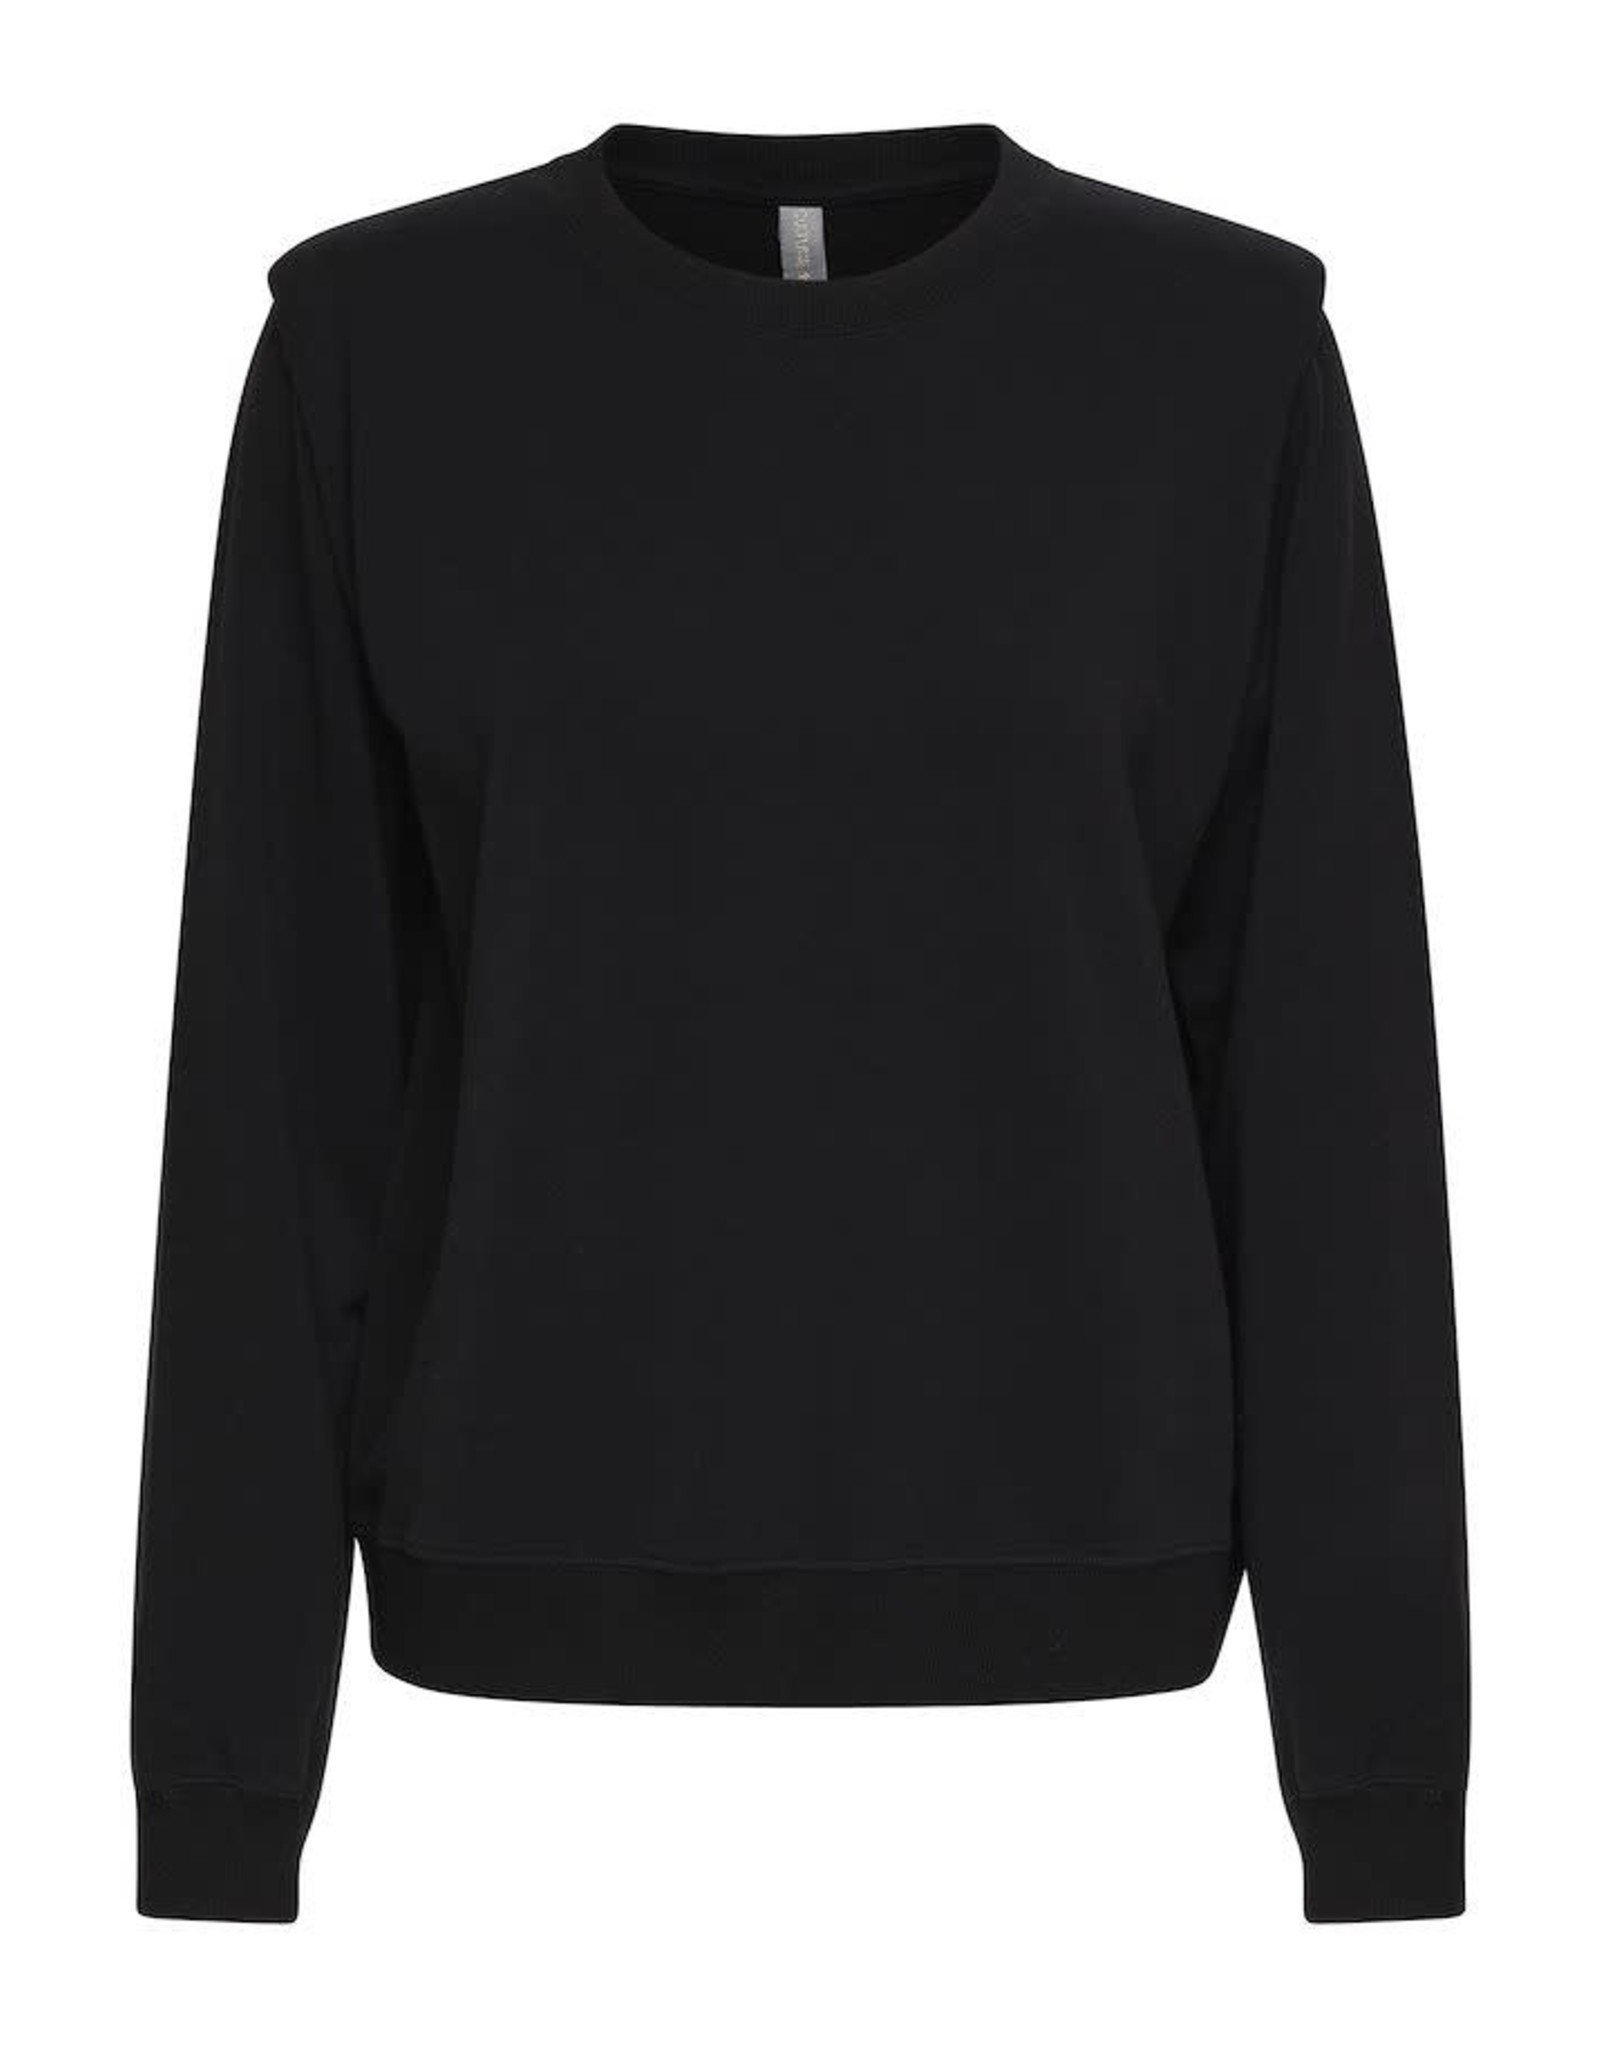 Culture Culture - Monty sweatshirt (black)